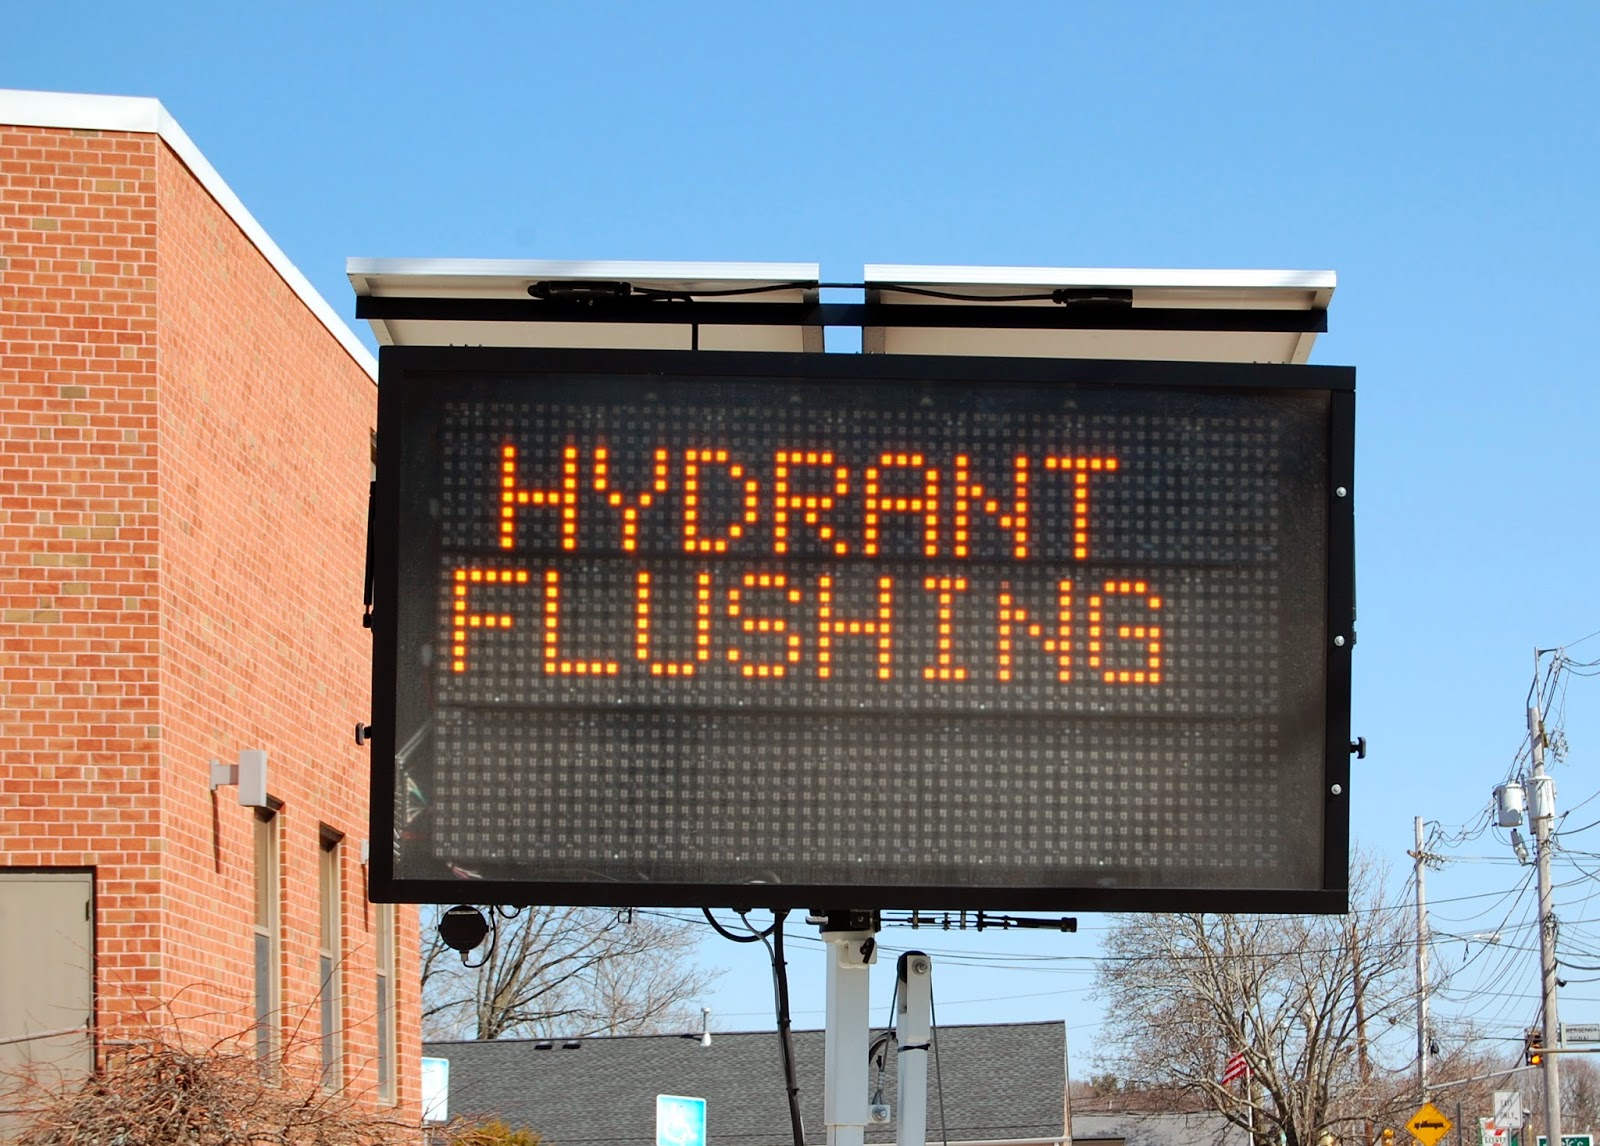 hydrant flushing - starts Apr 7